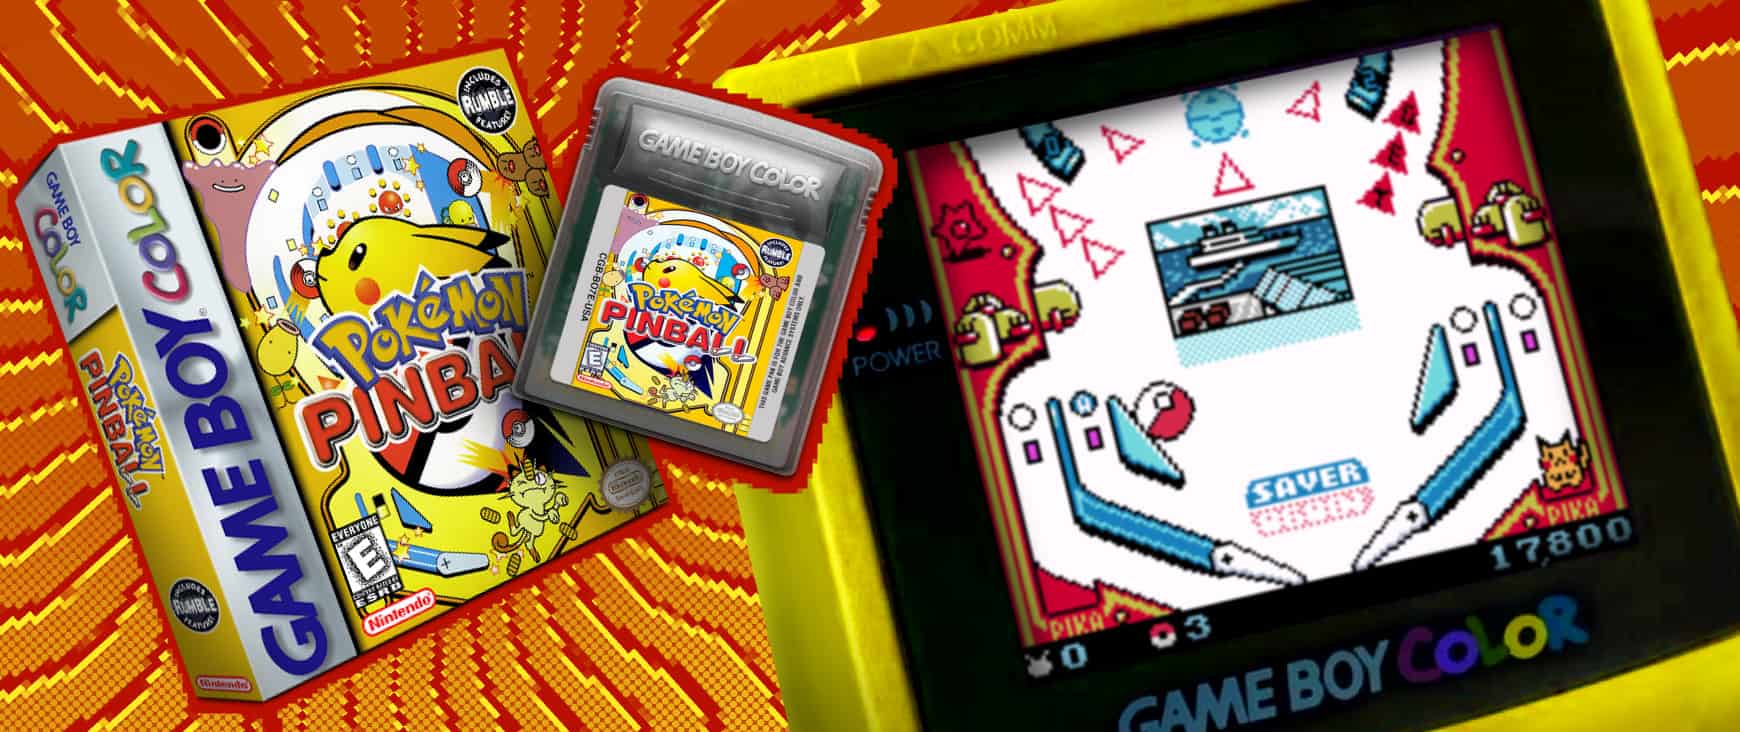 Pokémon Pinball for Game Boy Color